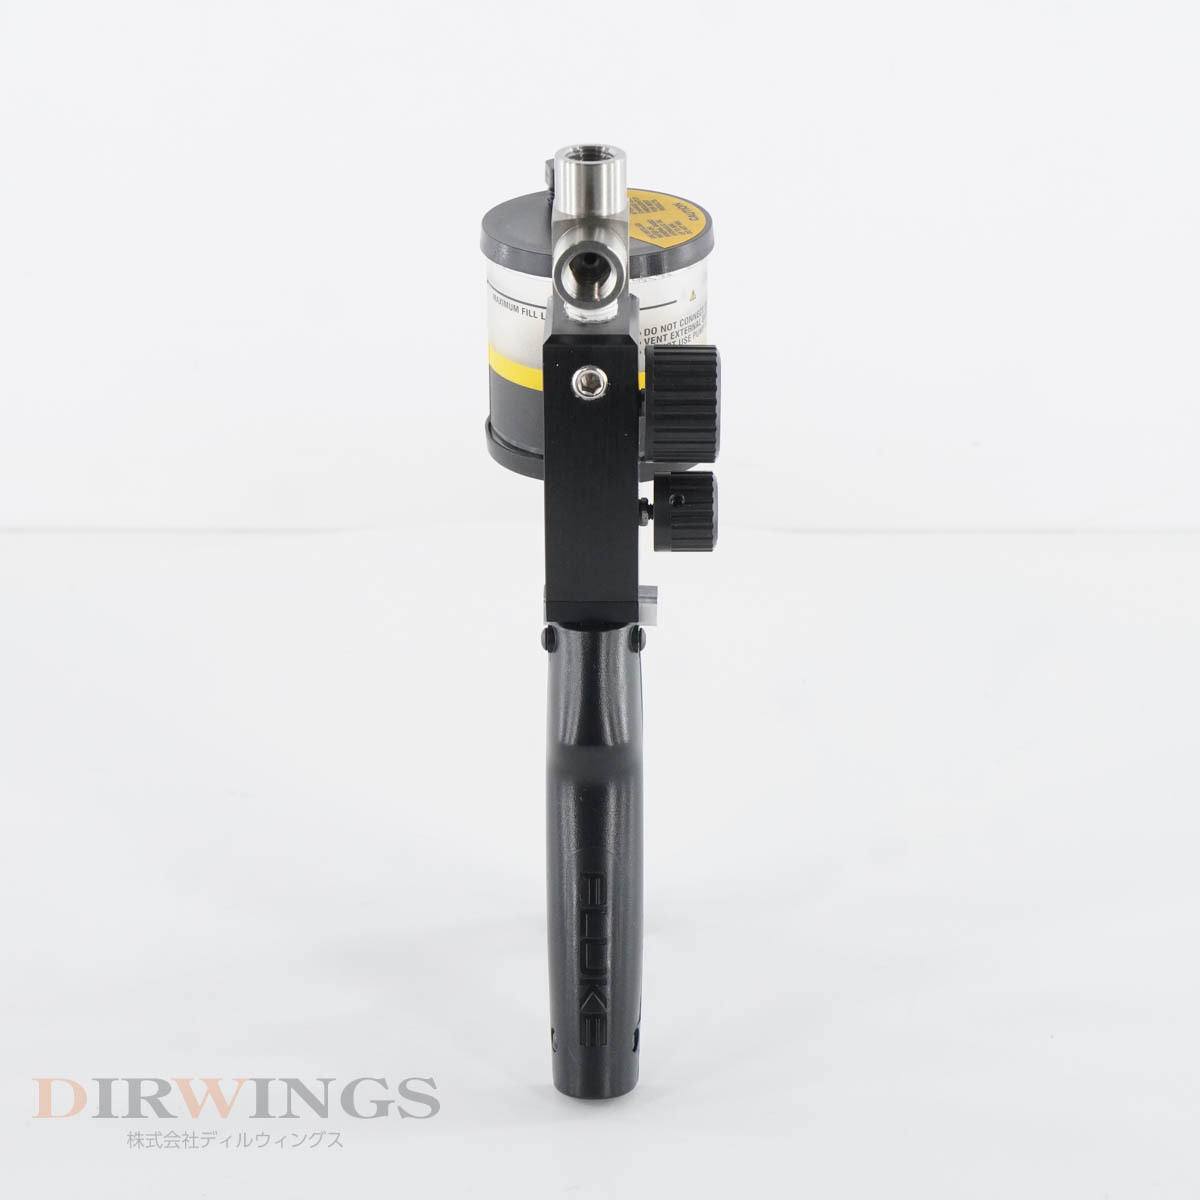 [JB] 保証なし 700HTPK2 700HTP2 FLUKE フルーク Hydraulic Test Pressure Kit Pump 油圧ポンプキット 圧力ポンプキット 電...[05830-0284]の画像7